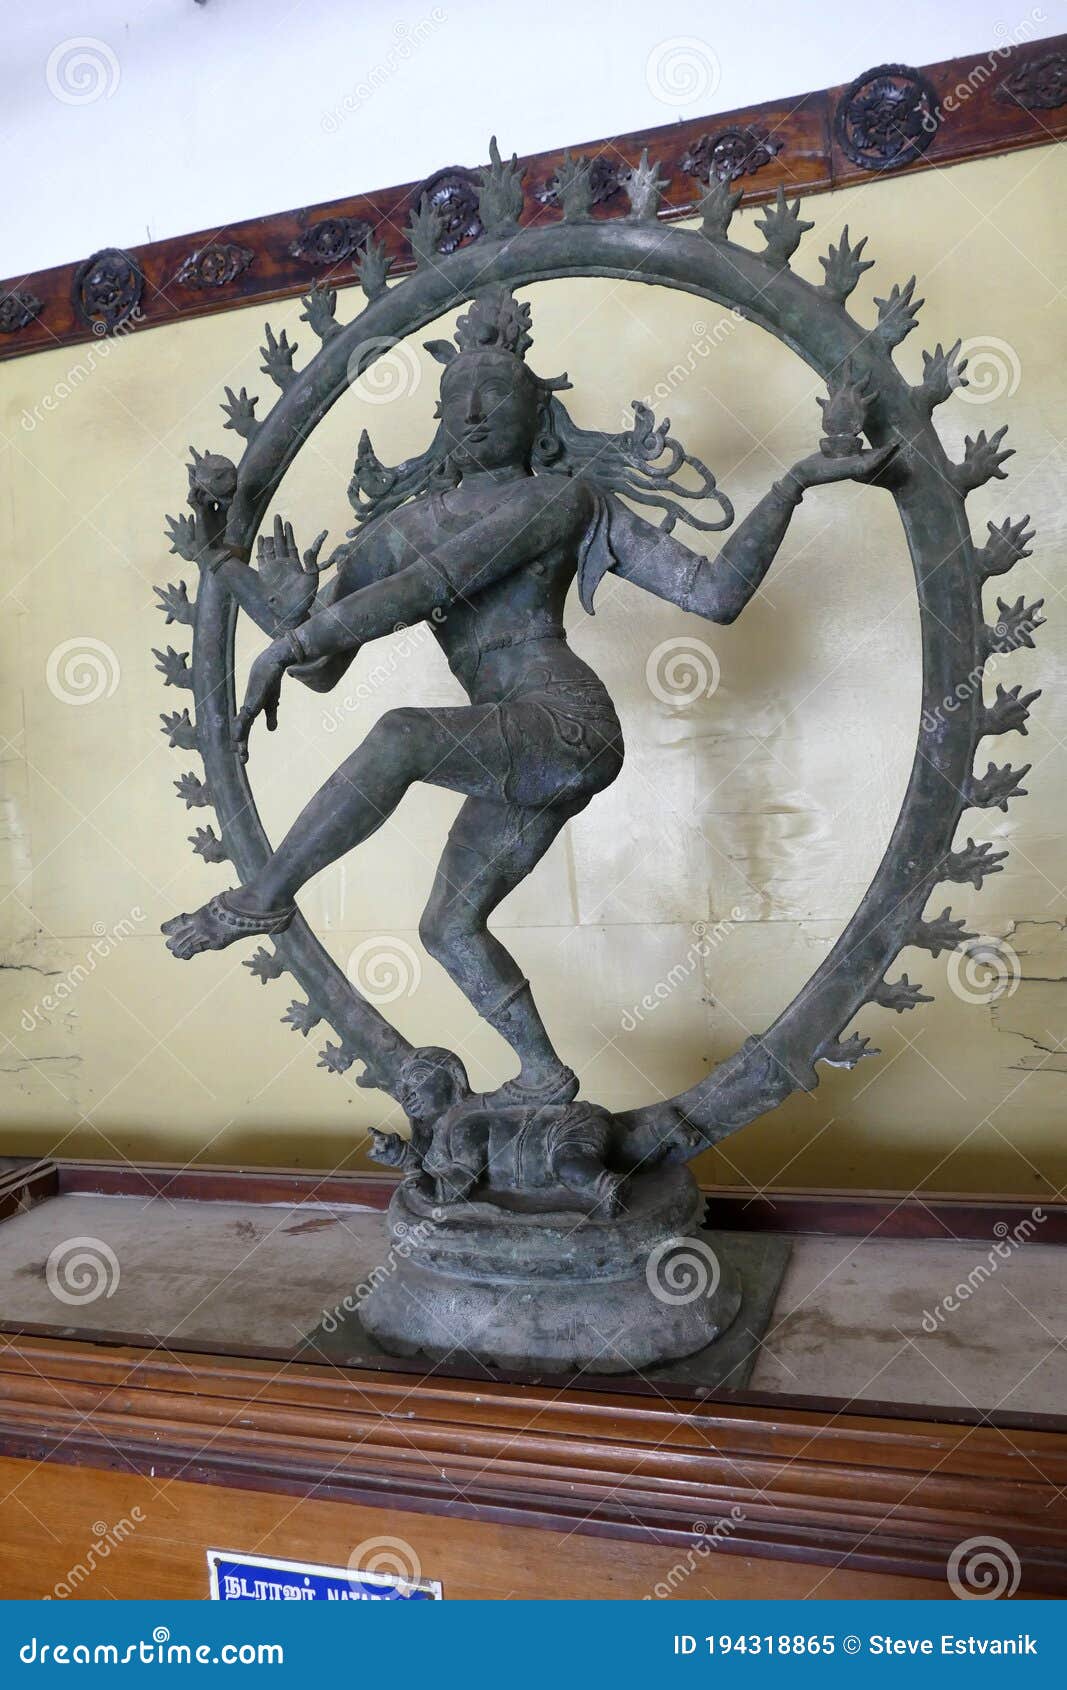 Shiva Nataraja Lord of the Dance Editorial Image - Image of ...